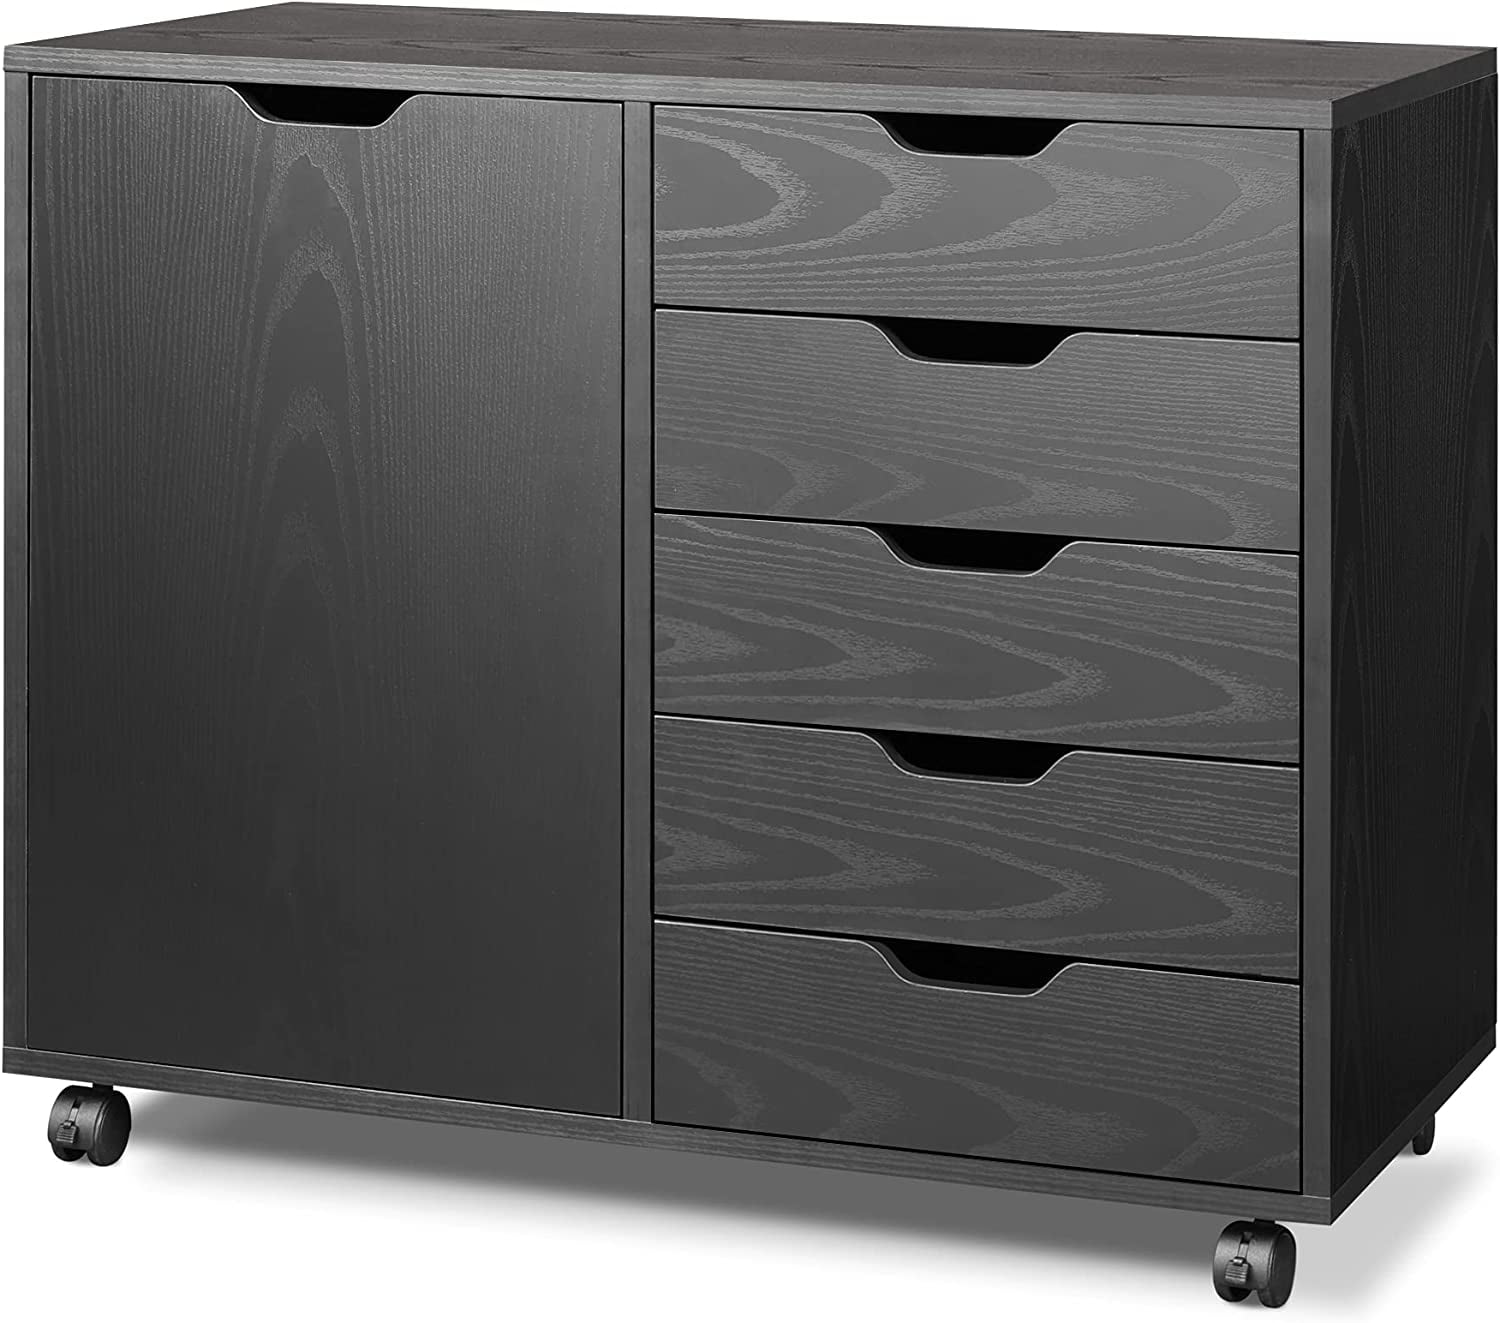 DEVAISE 5-Drawer Wood Dresser Chest with Door, Mobile Storage Cabinet, Printer Stand for Home Office, Black - Walmart.com